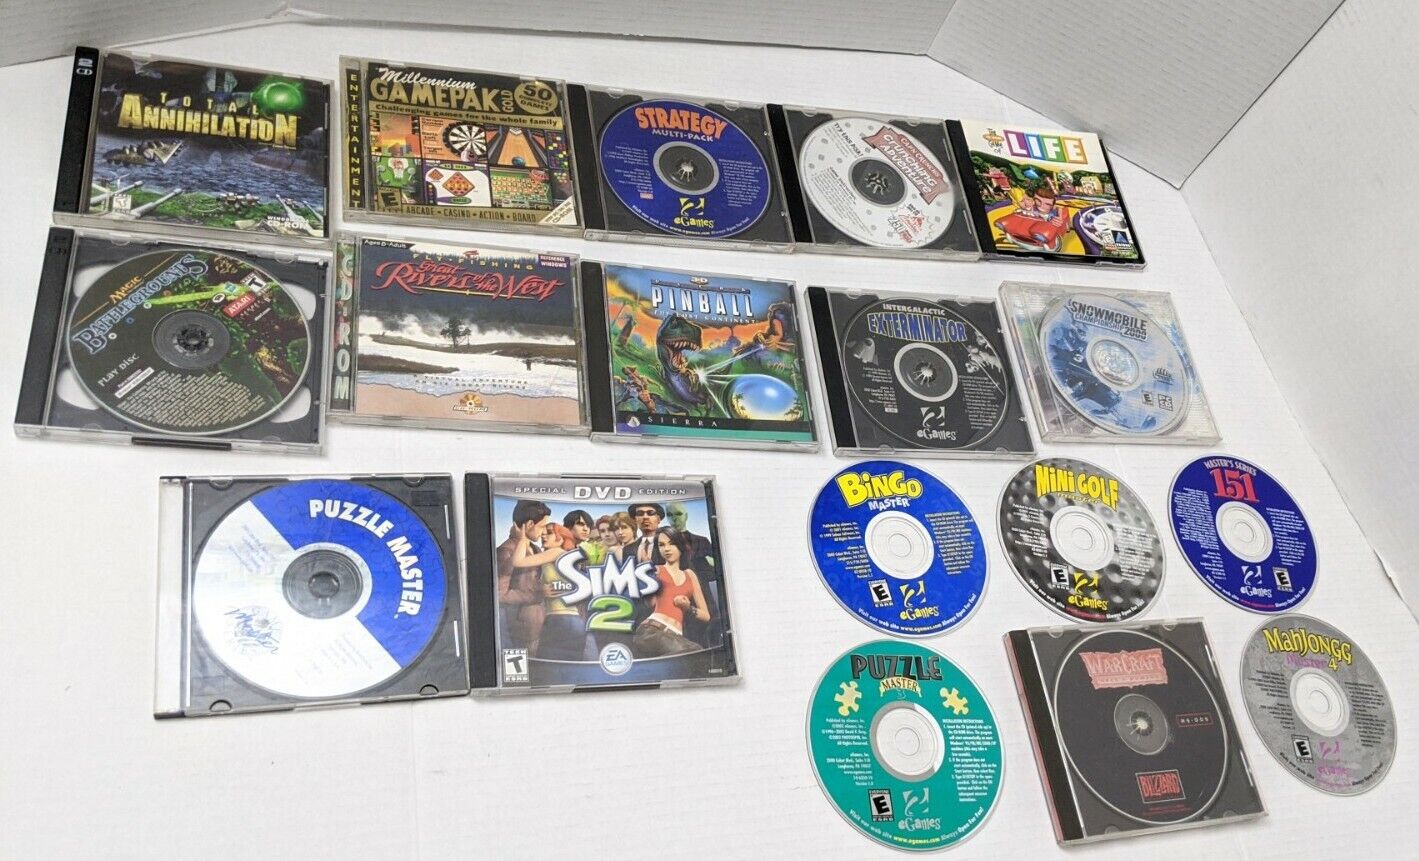 Chessmaster 9000 PC CD-ROM Computer Game - Two Discs - Windows 98/ME/XP